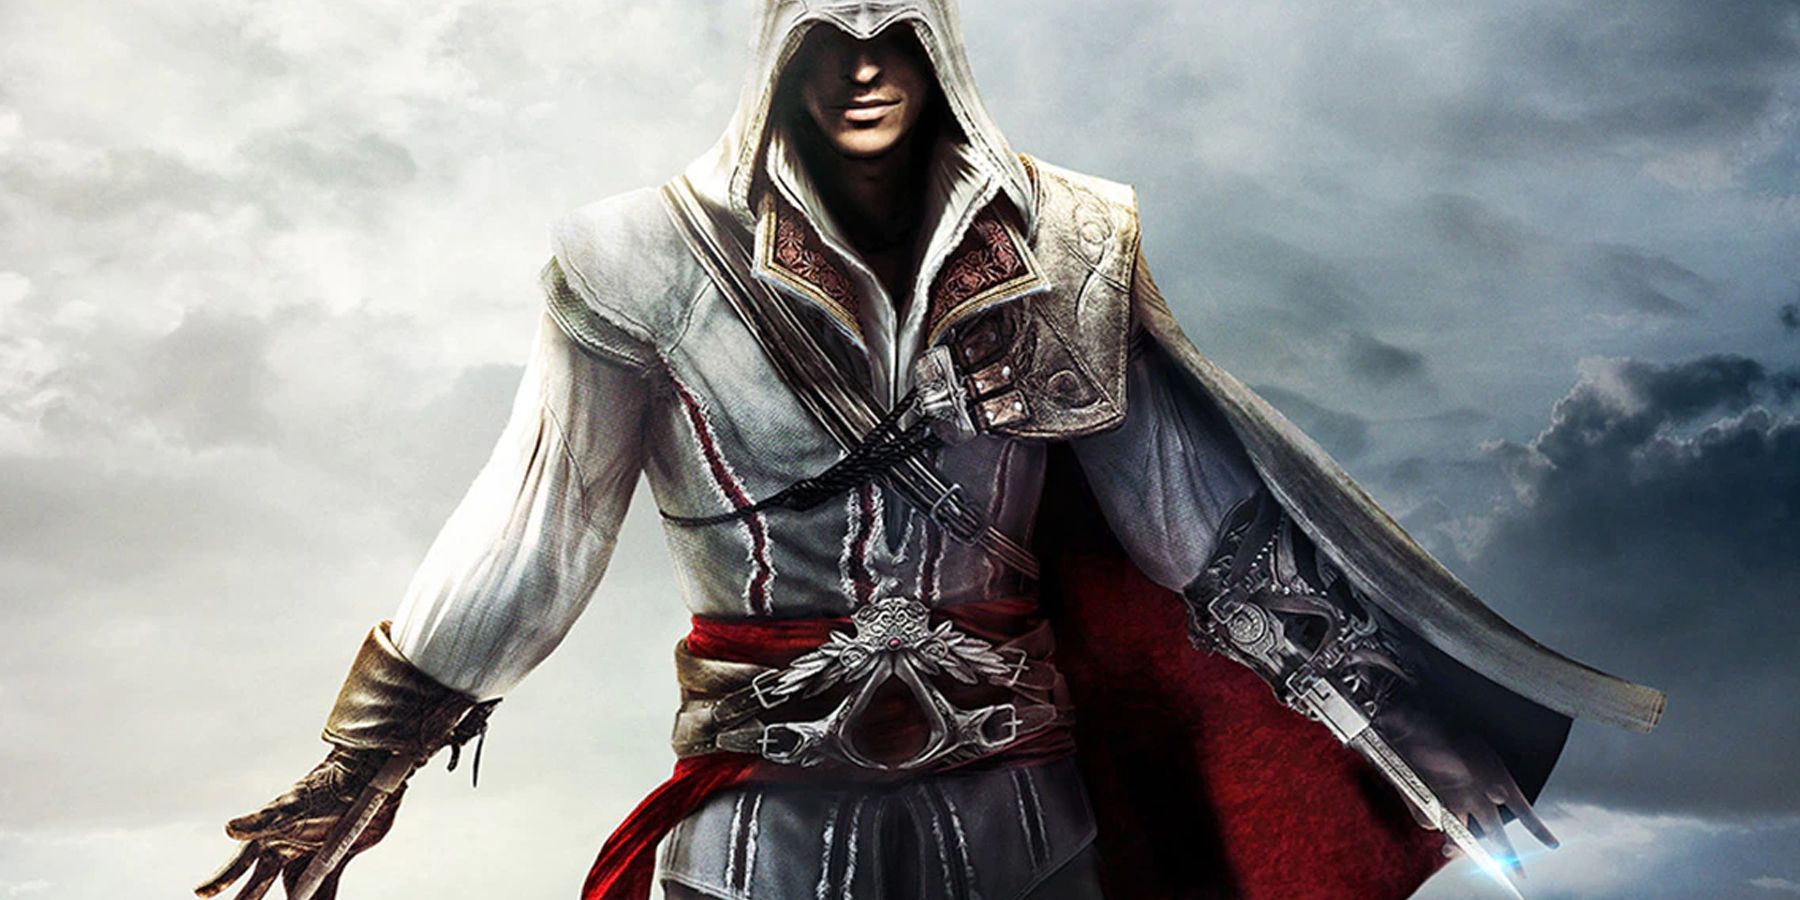 Ezio Auditore da Firenze in his assassin outfit